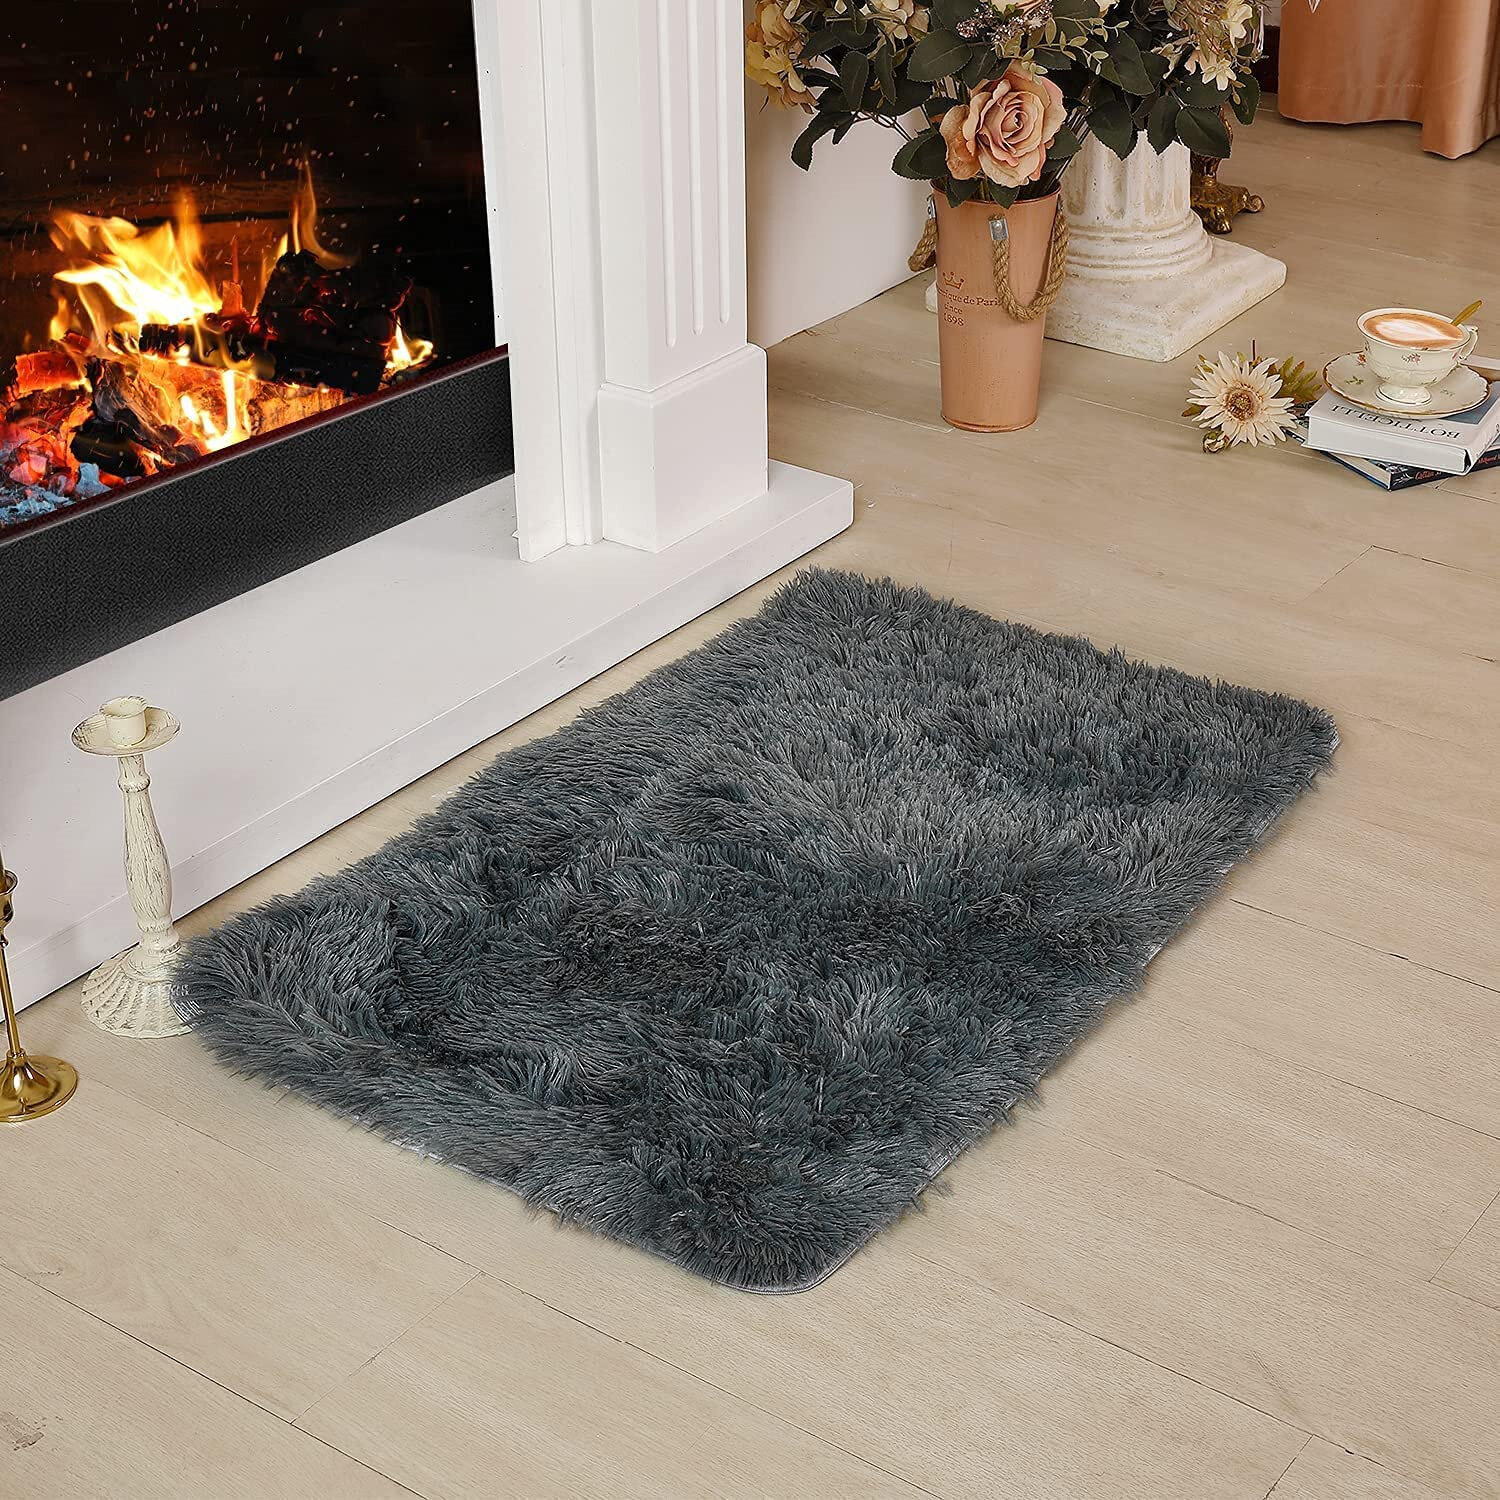 Non-slip Faux Fur Rug Shaggy Area Rugs Plush Soft Mat Bedroom Floor Decor Carpet 